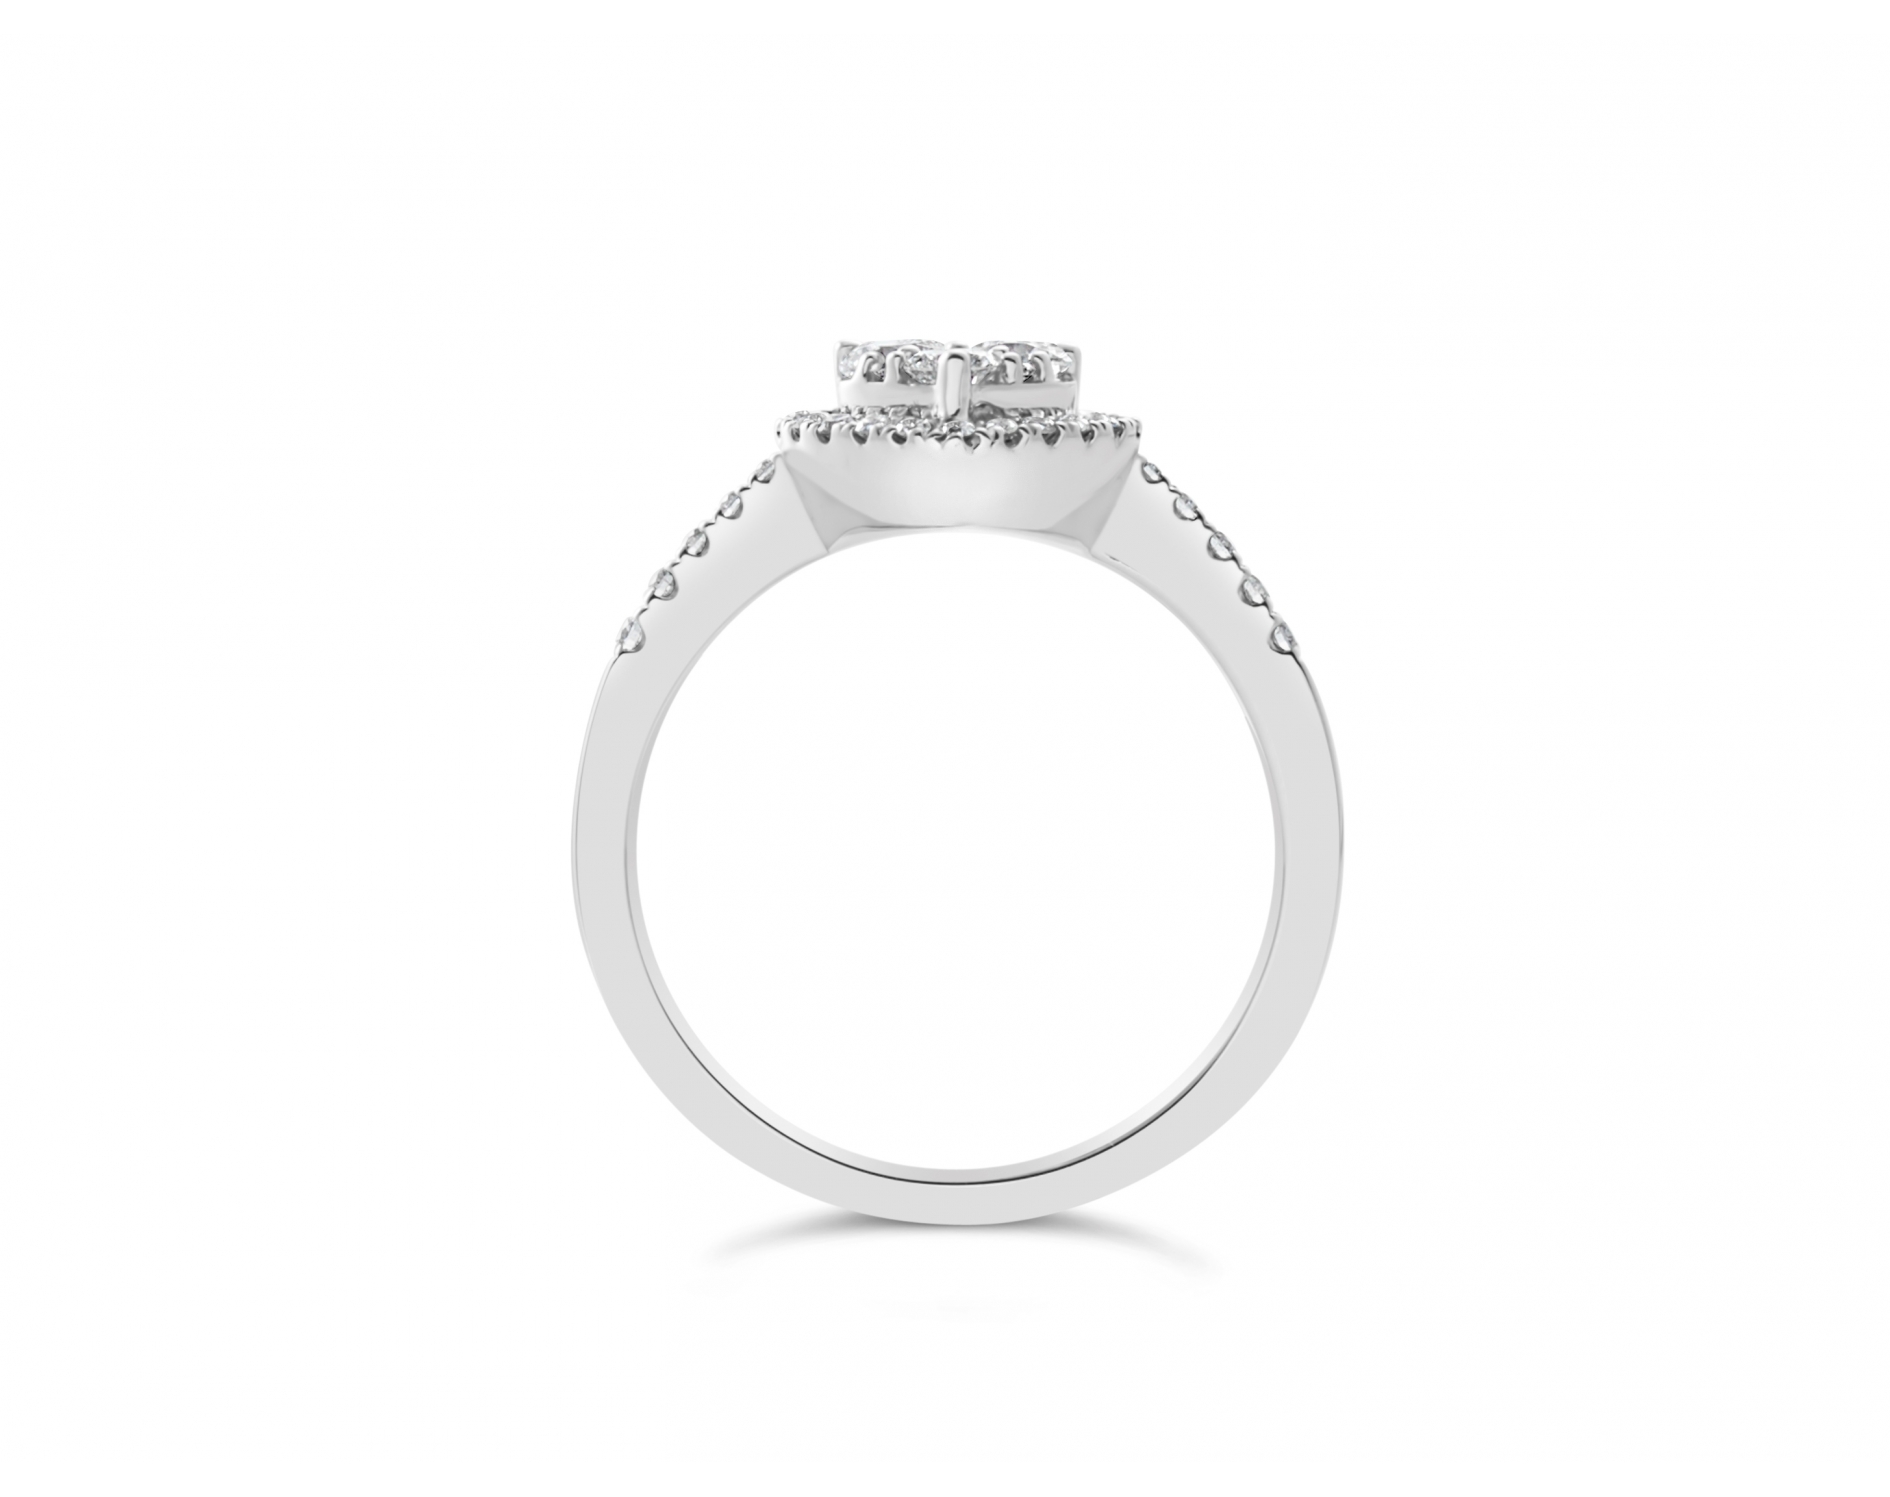 18k white gold heart shaped halo illusion set engagement ring with round pave set diamonds